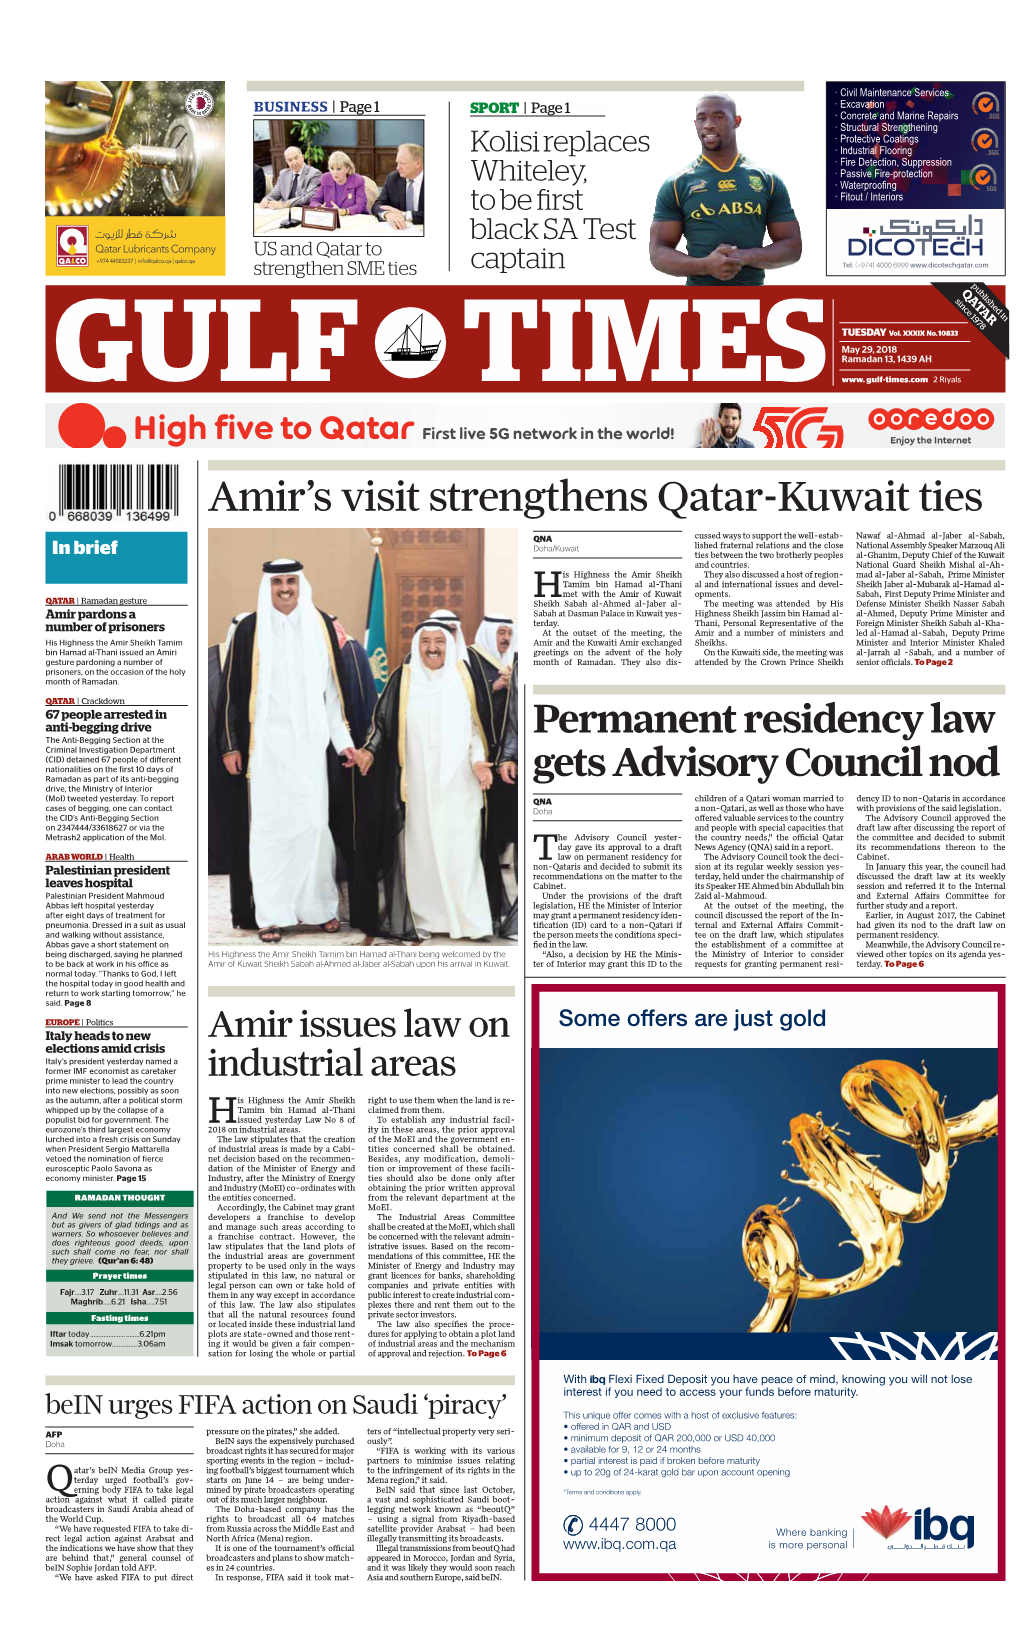 Amir's Visit Strengthens Qatar-Kuwait Ties